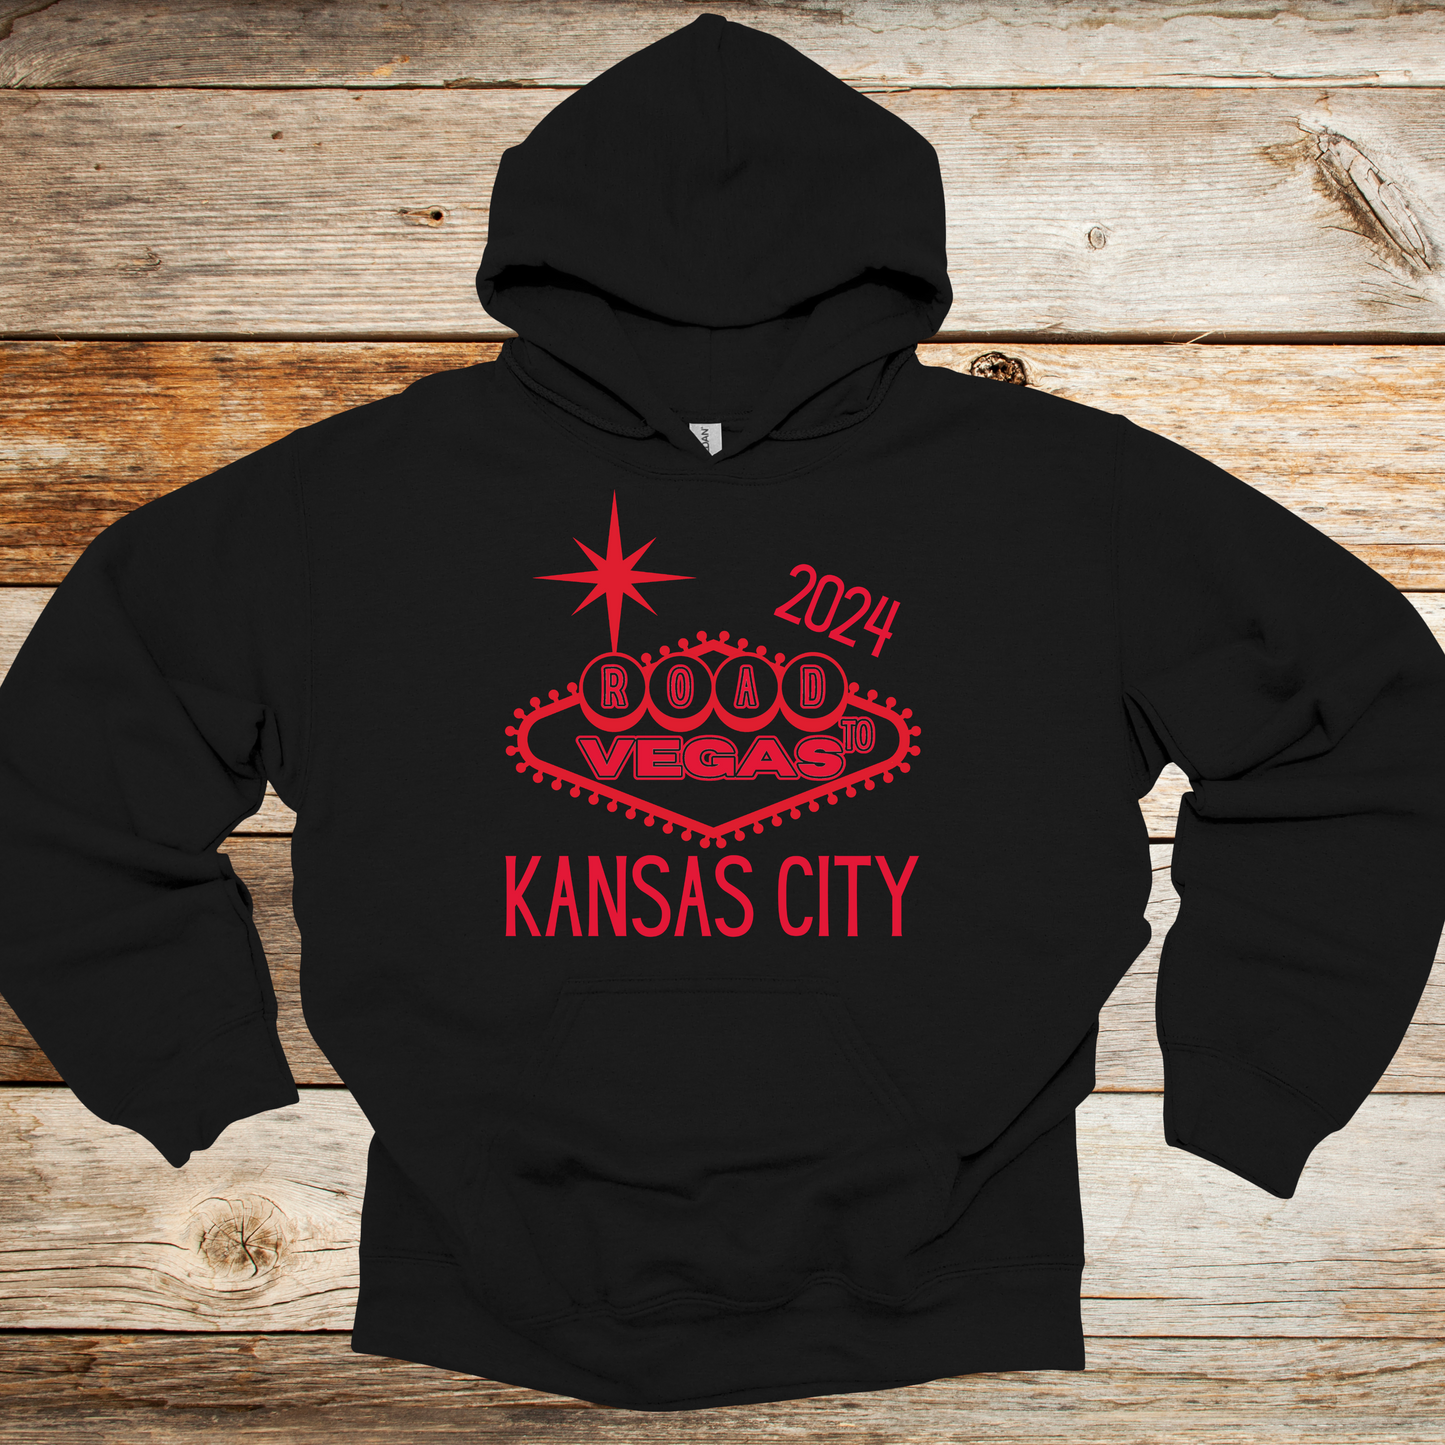 Kansas City Chiefs - Road to Vegas - Adult Tee Shirt, Crewneck Sweatshirts and Hoodie